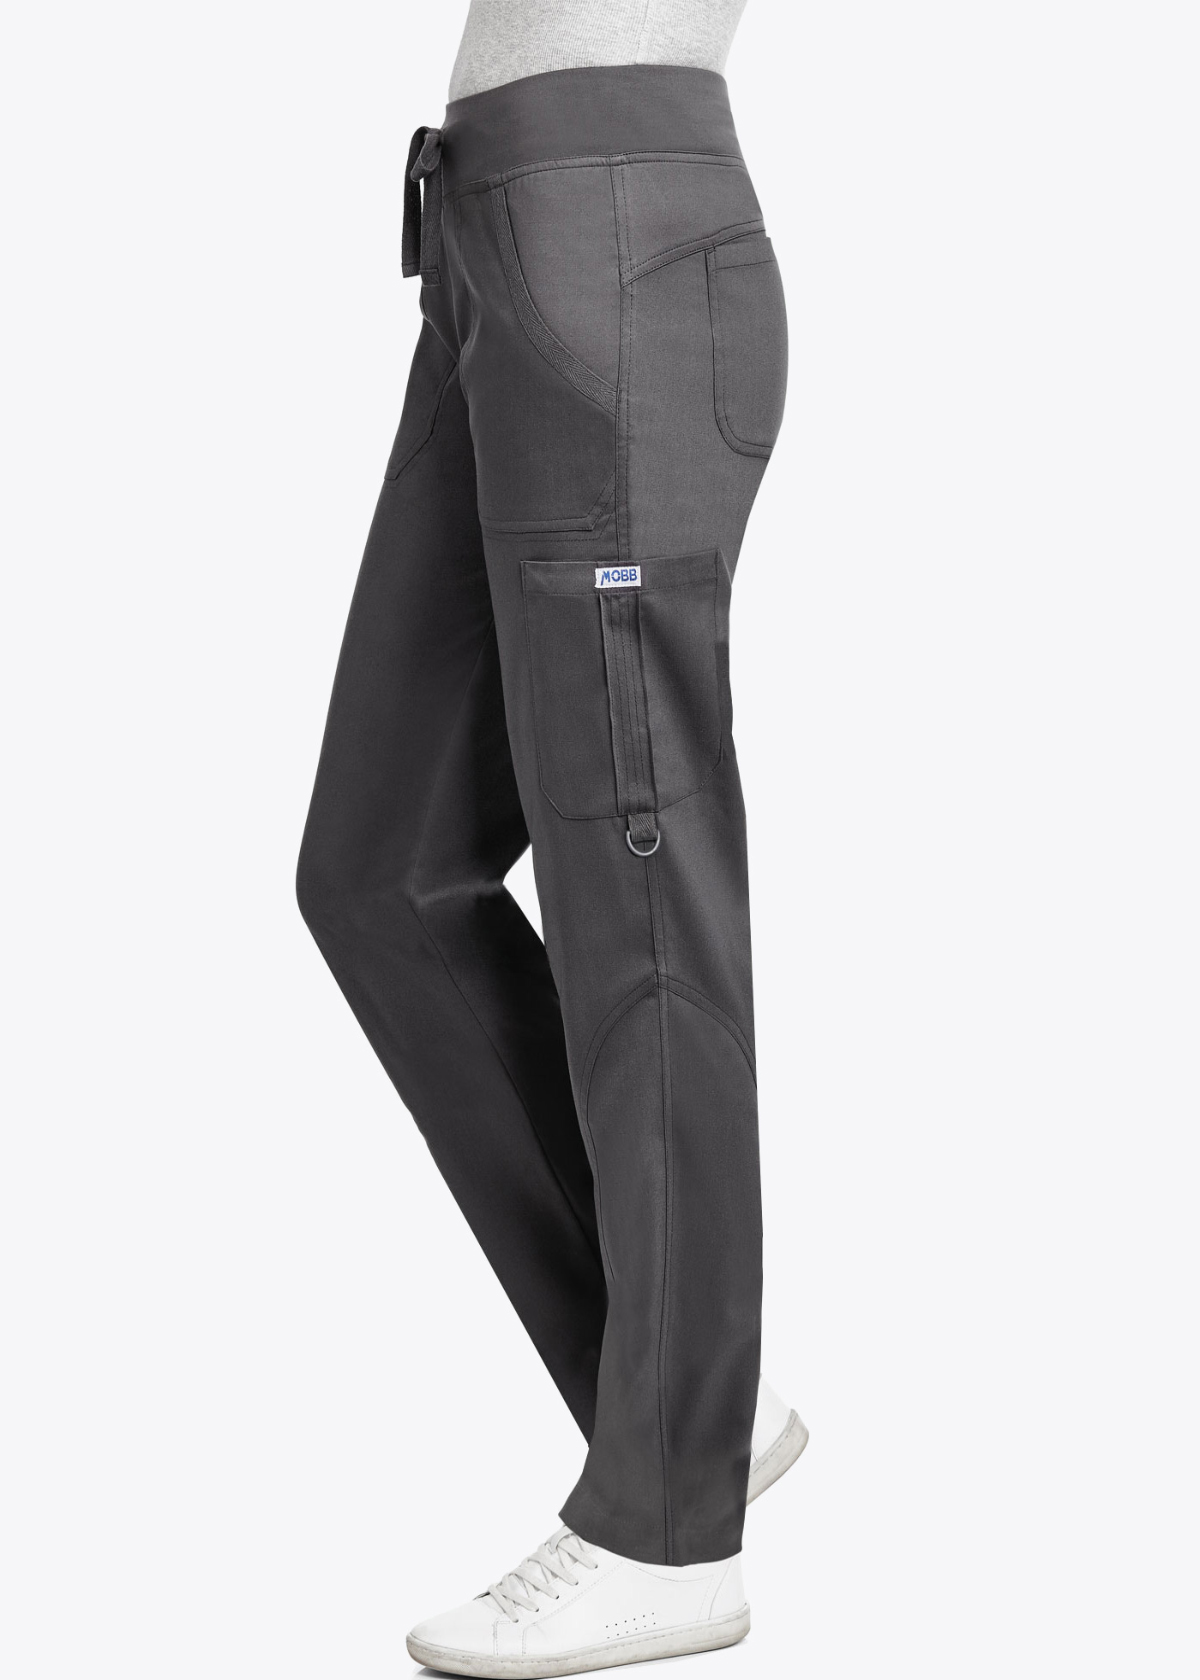 Jesse Unisex Drawstring/Elastic Waistband Scrub Pant - Universal Work Wear